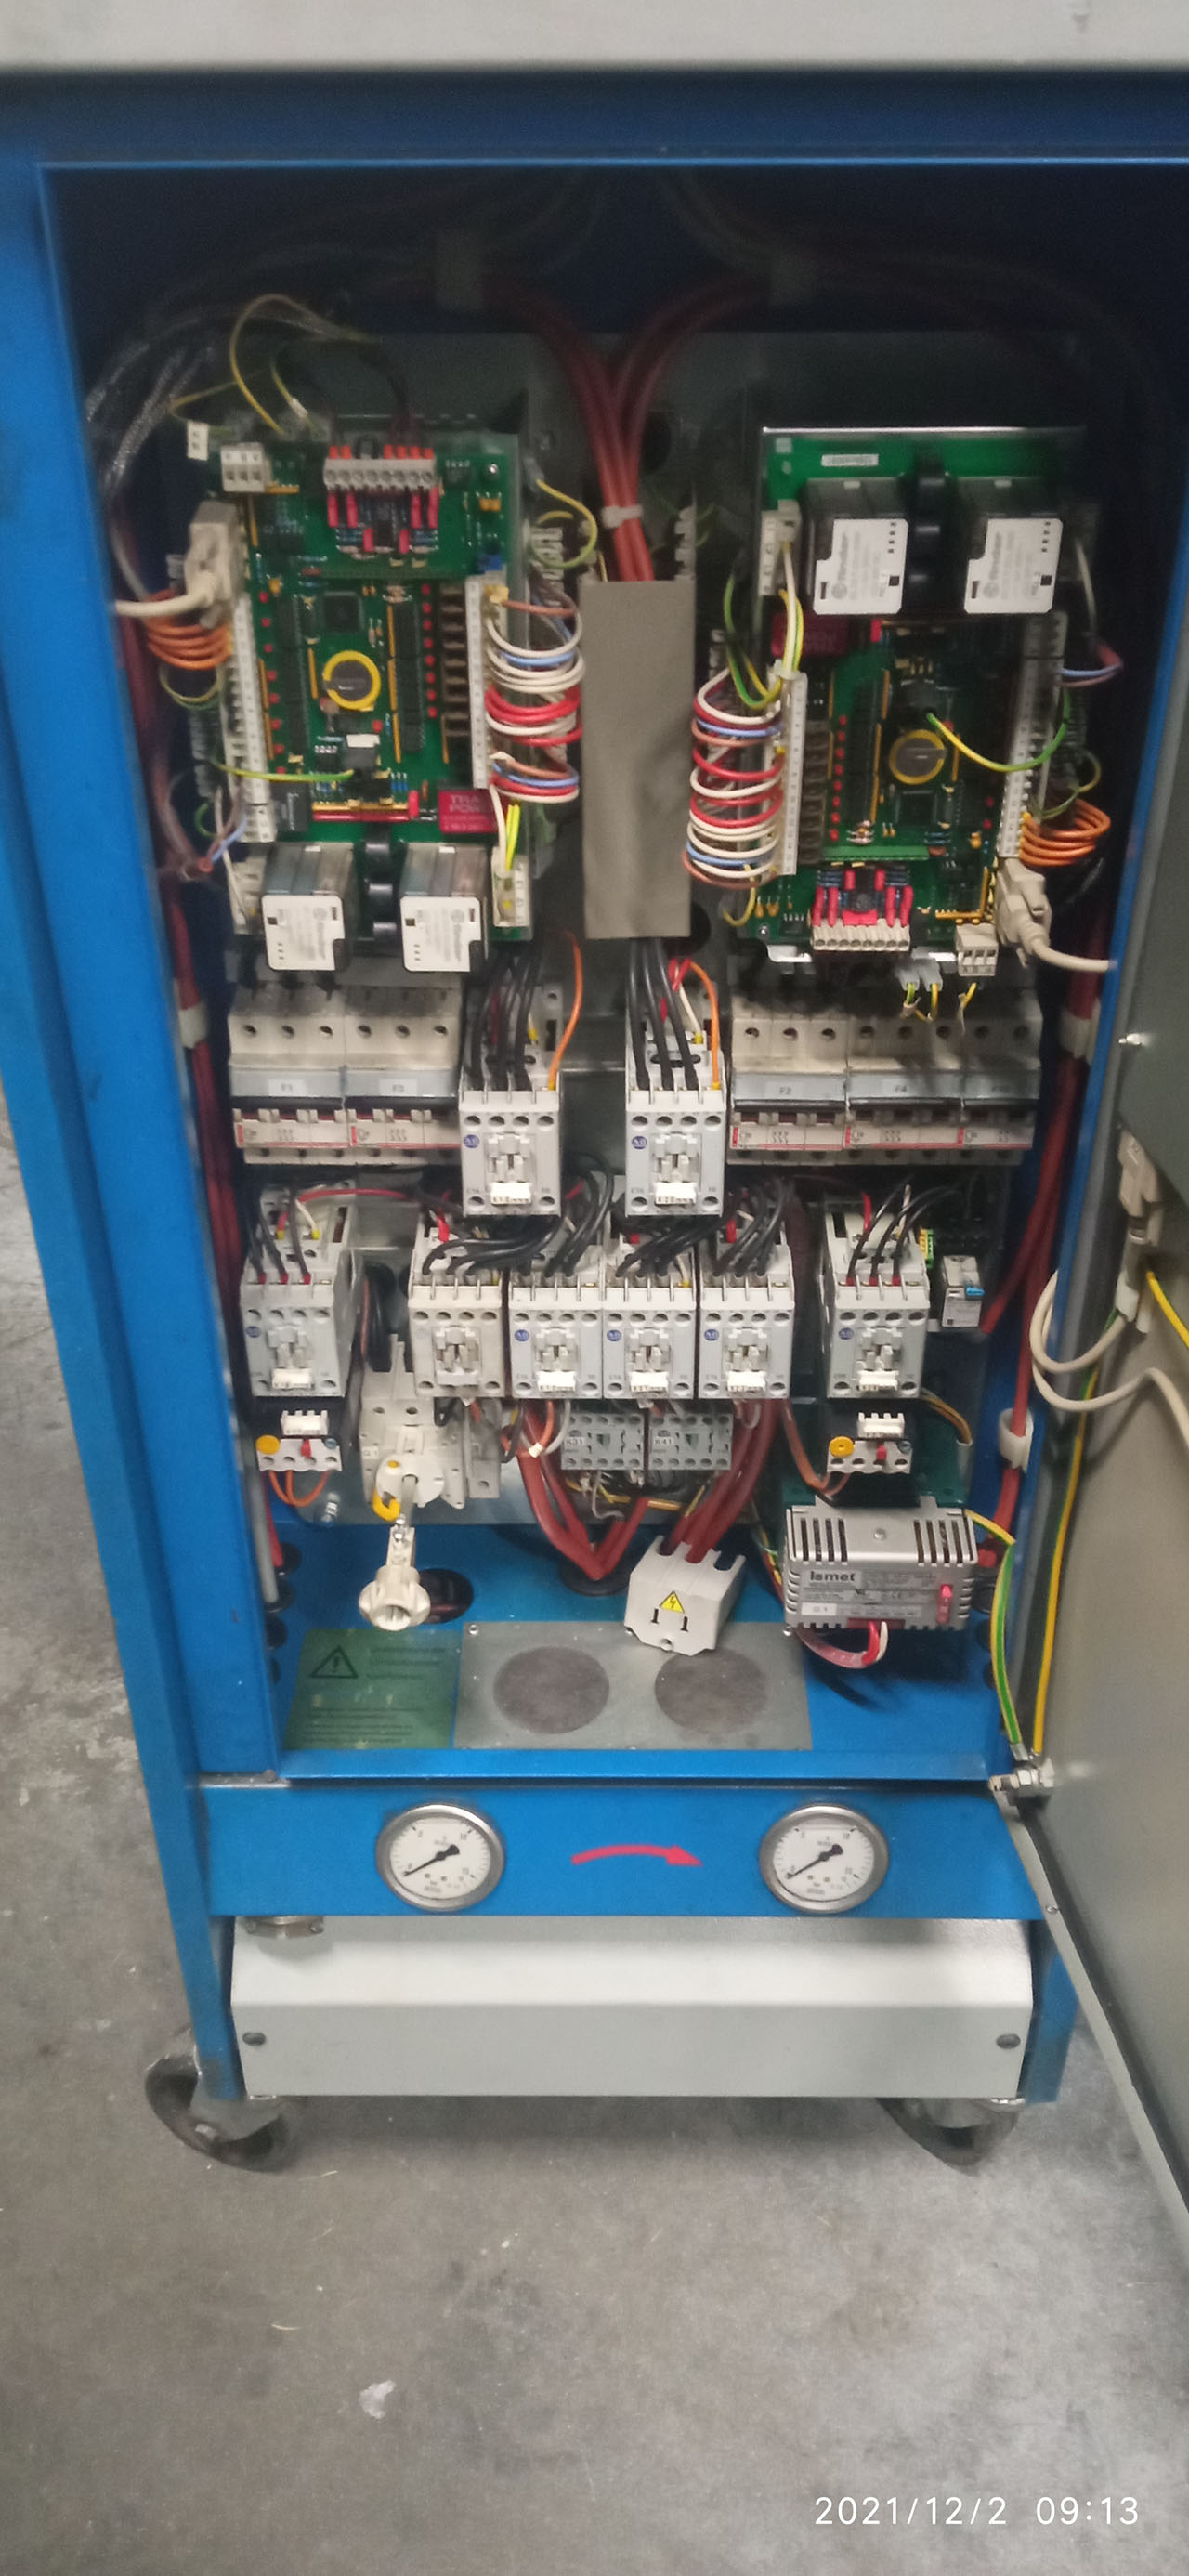 Robamat Thermocast 2212 temperature control unit ZU2161, used